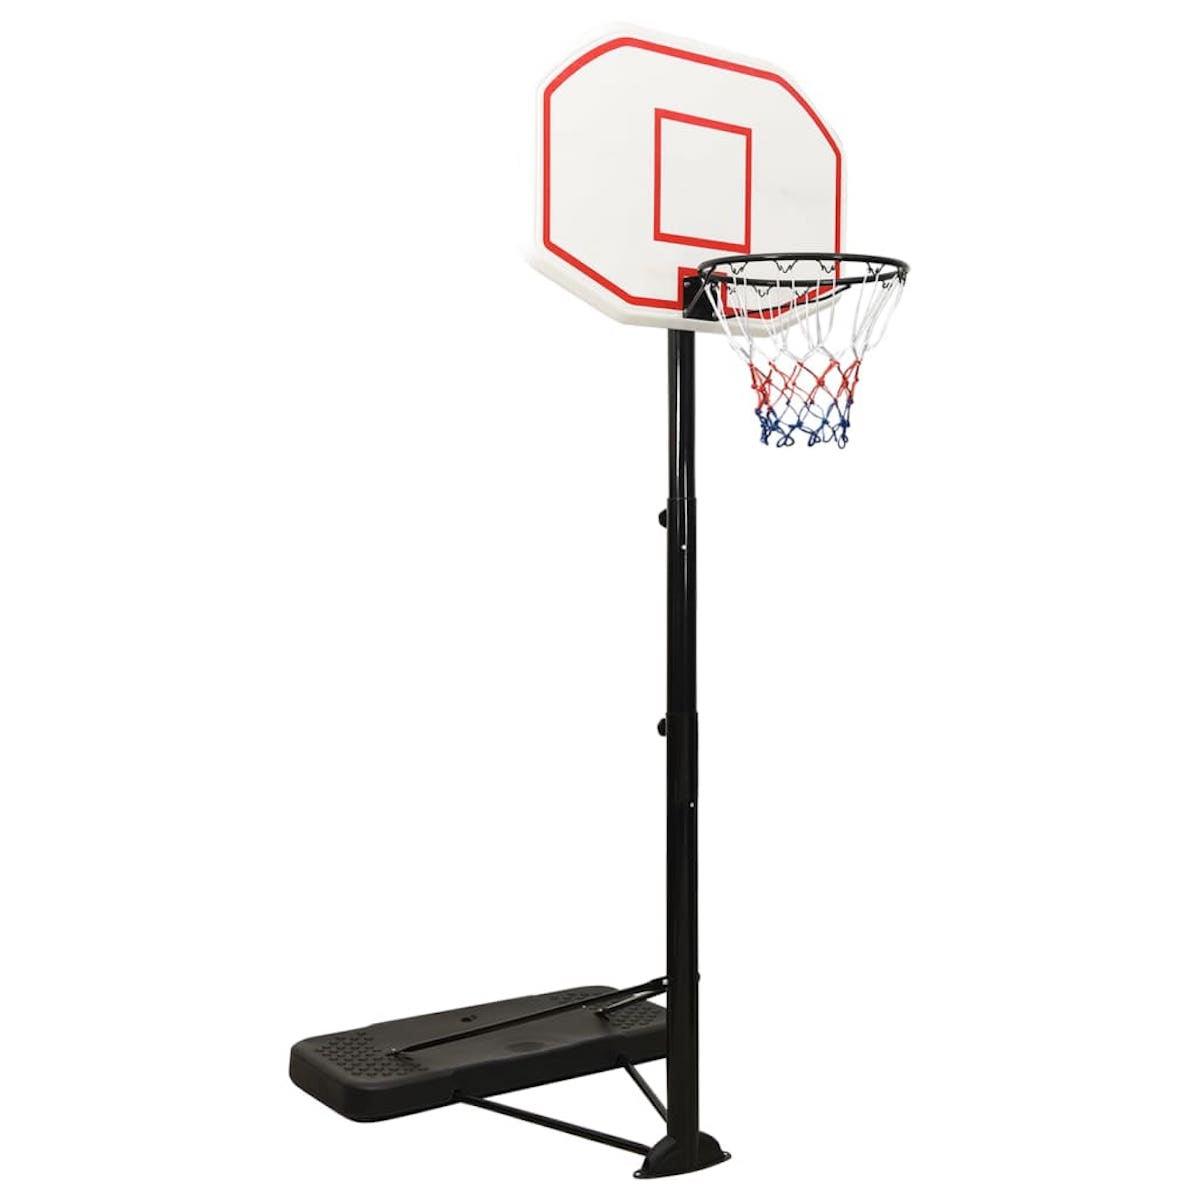 Basketkorg med stativ 258-363 cm